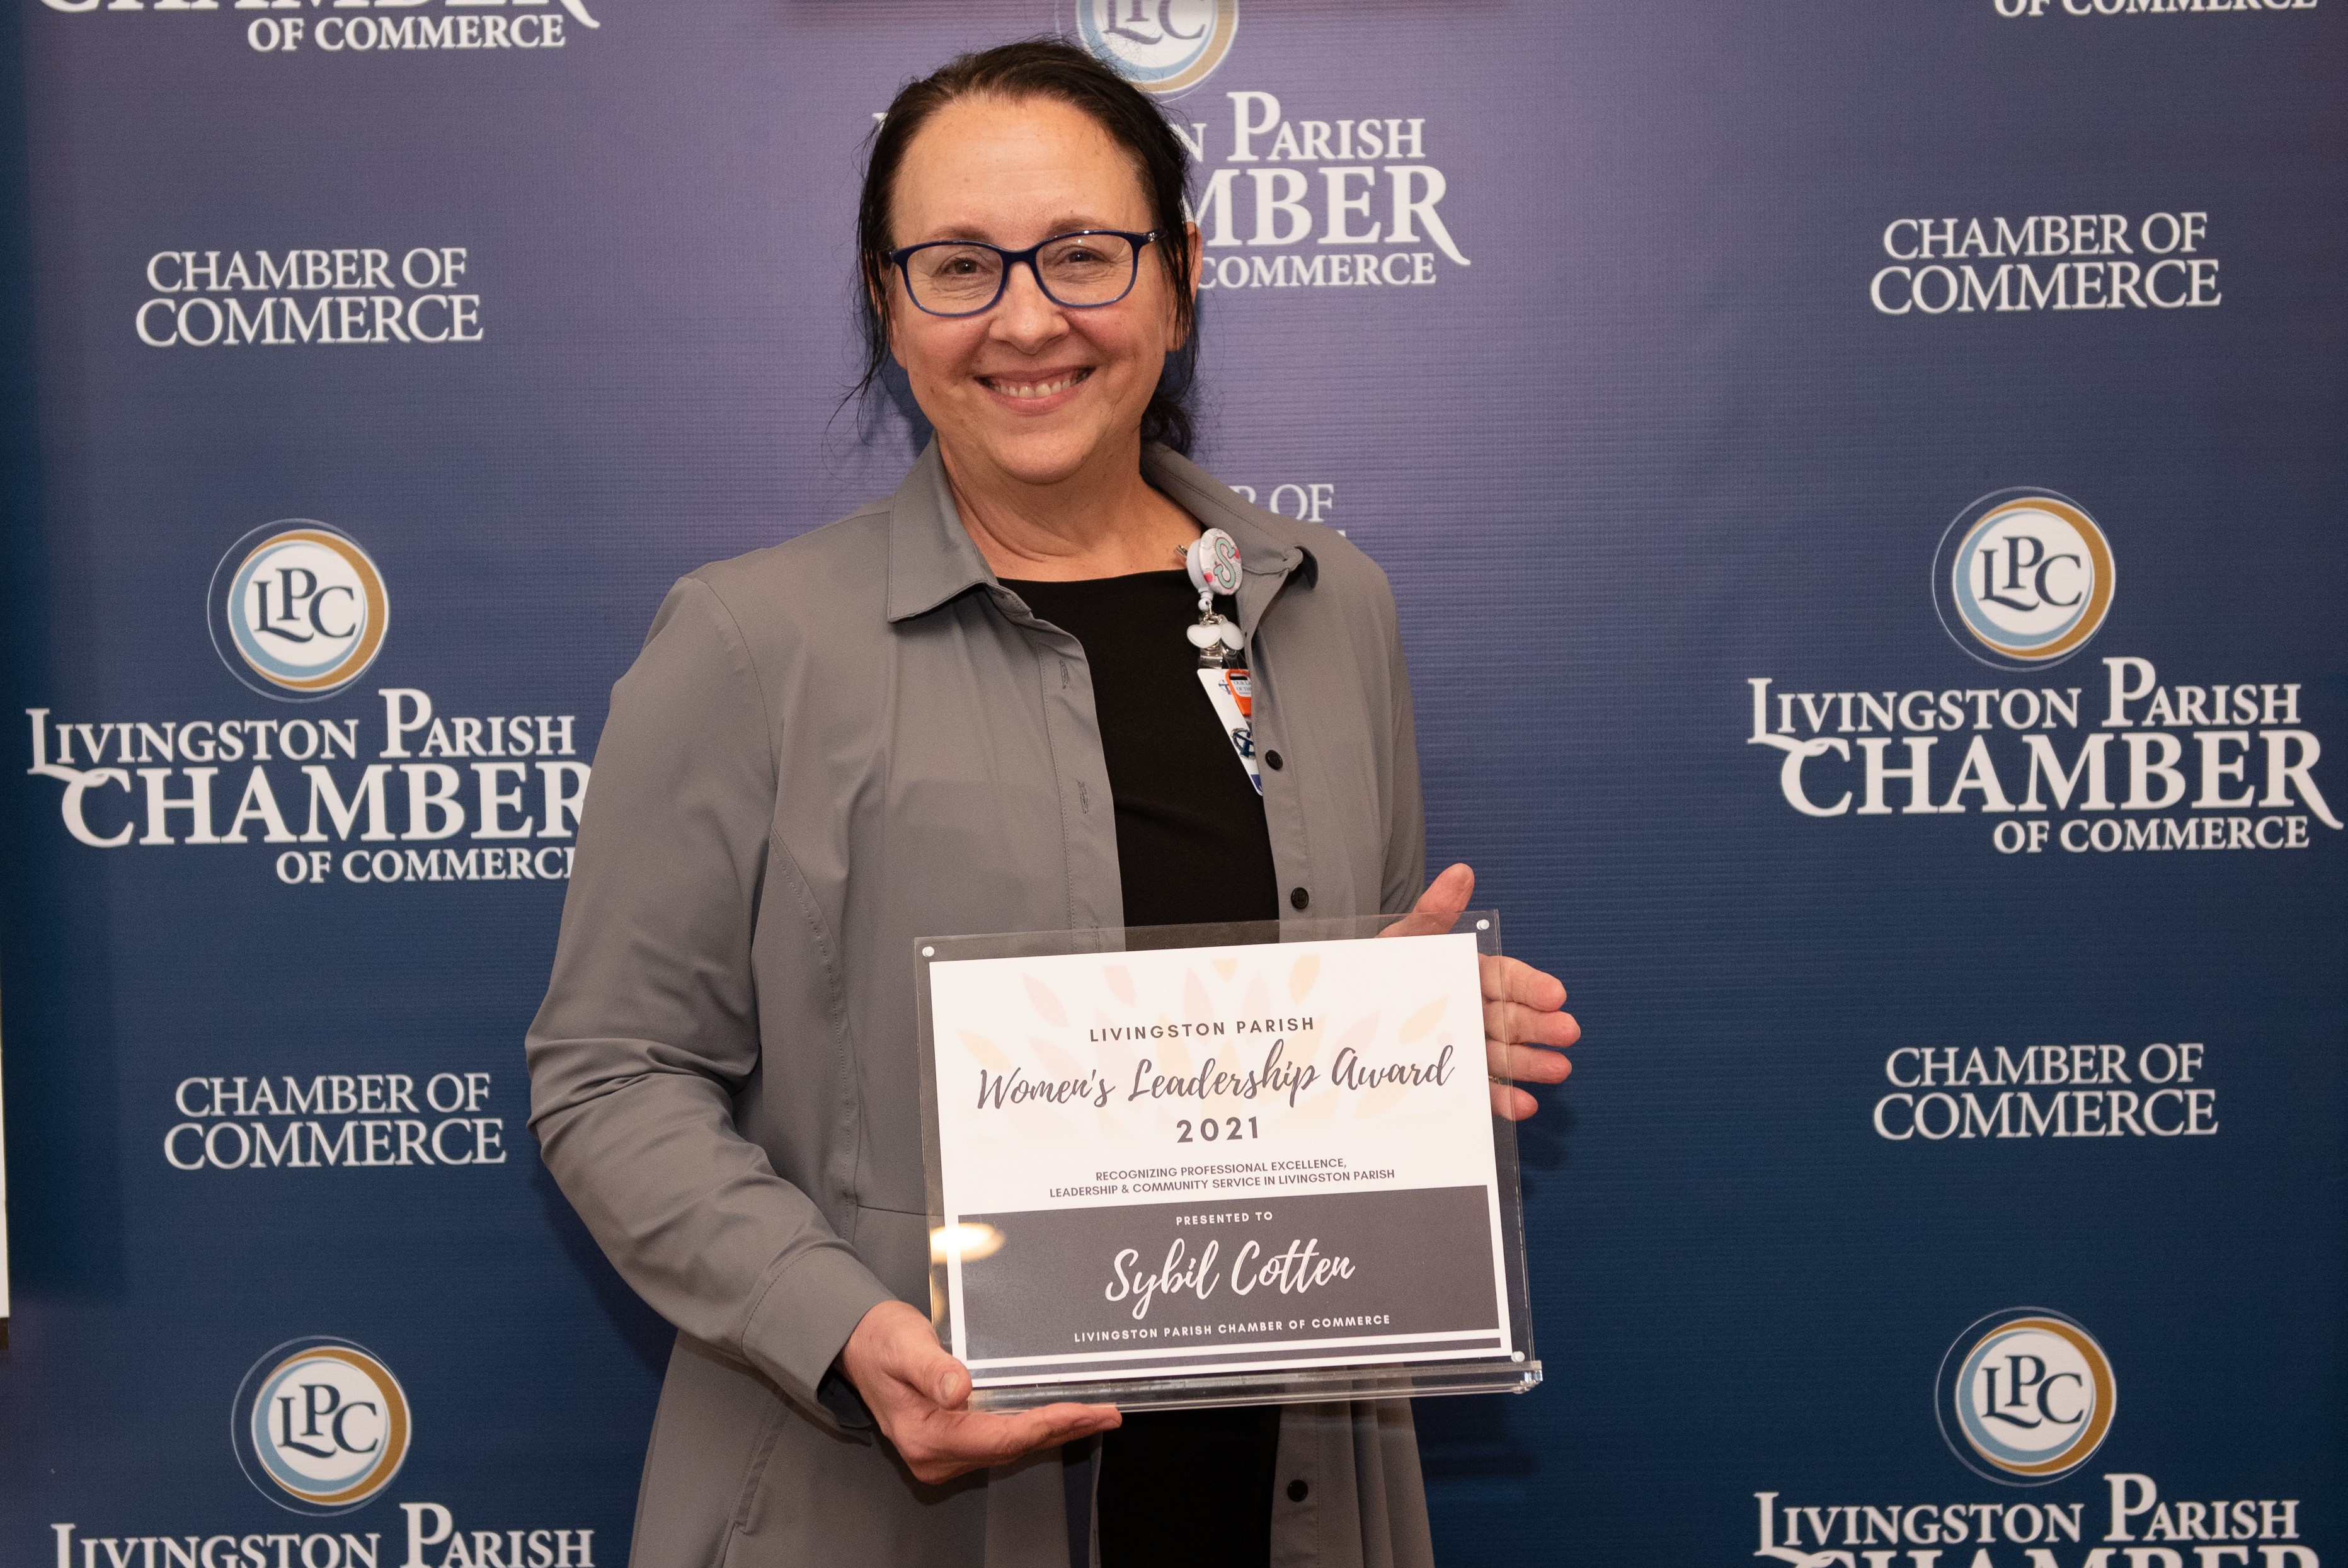 2021 Women's Leadership Award Winner, Sybil Cotten